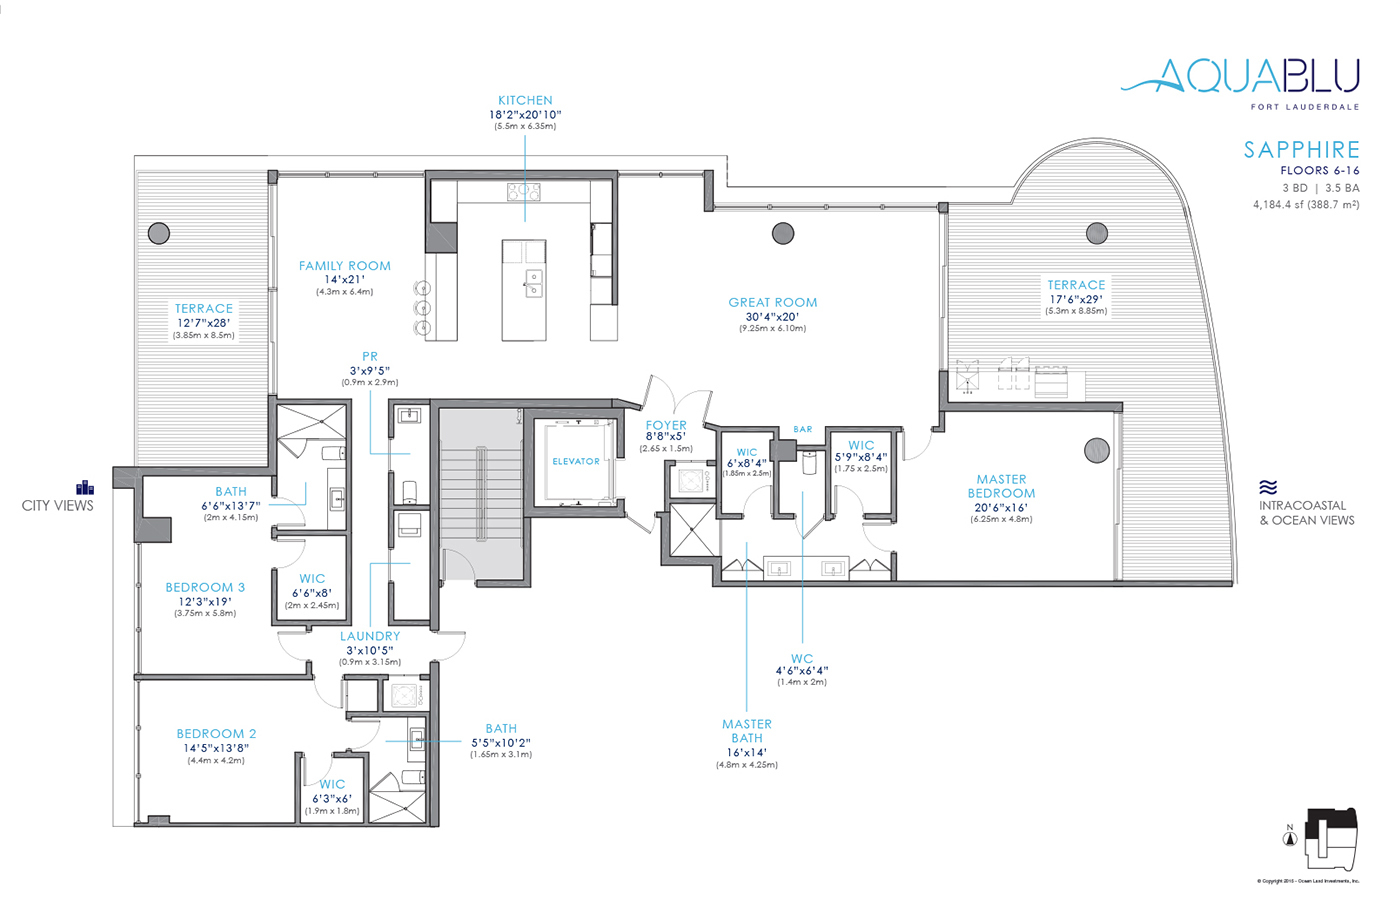 Floor Plan for AquaBlu Fort Lauderdale Floorplans, Sapphire